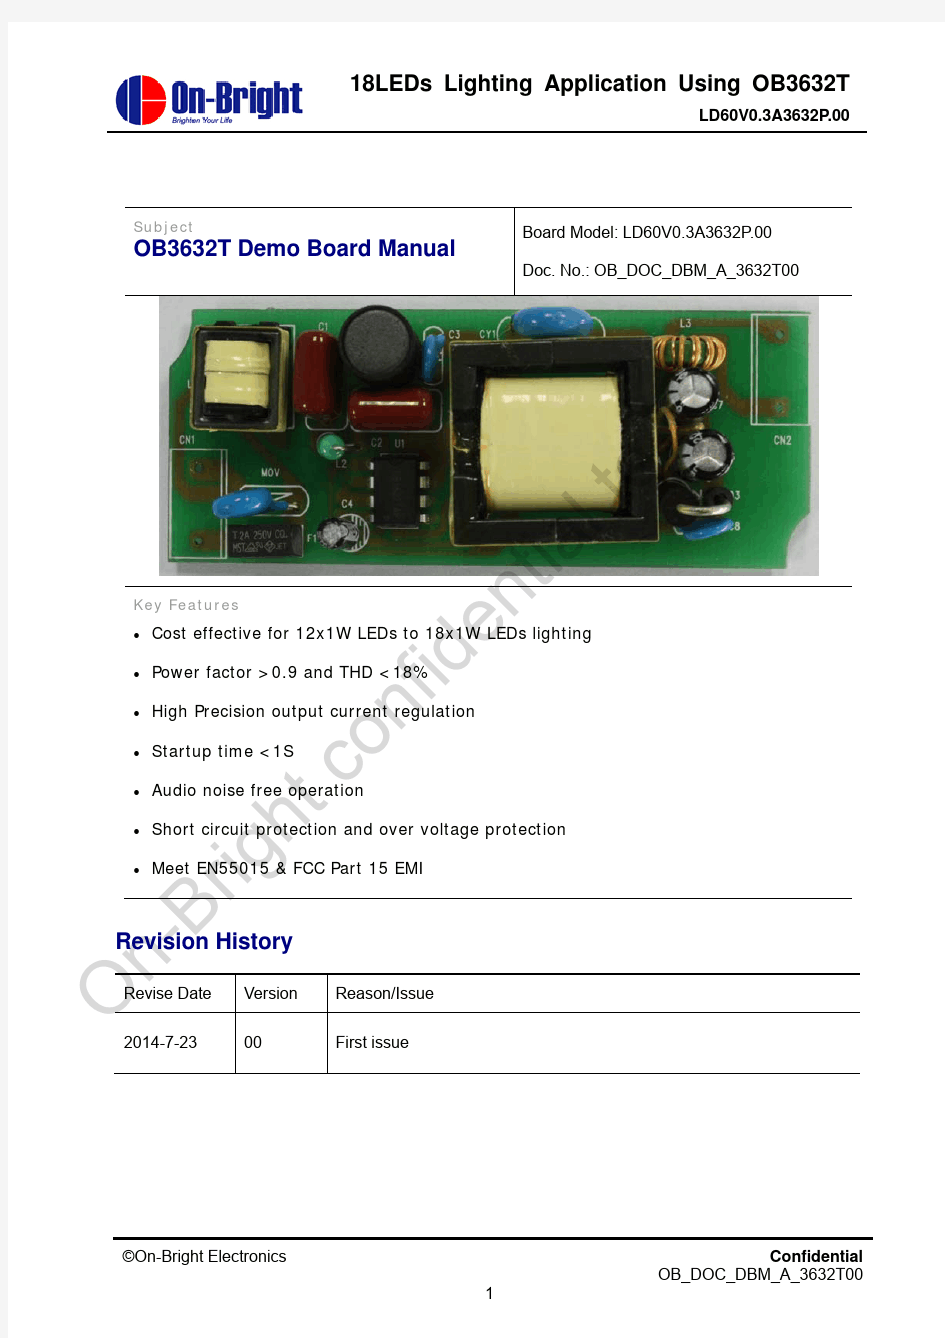 OB3632T Demo Board Manual(A)_森海威_140729